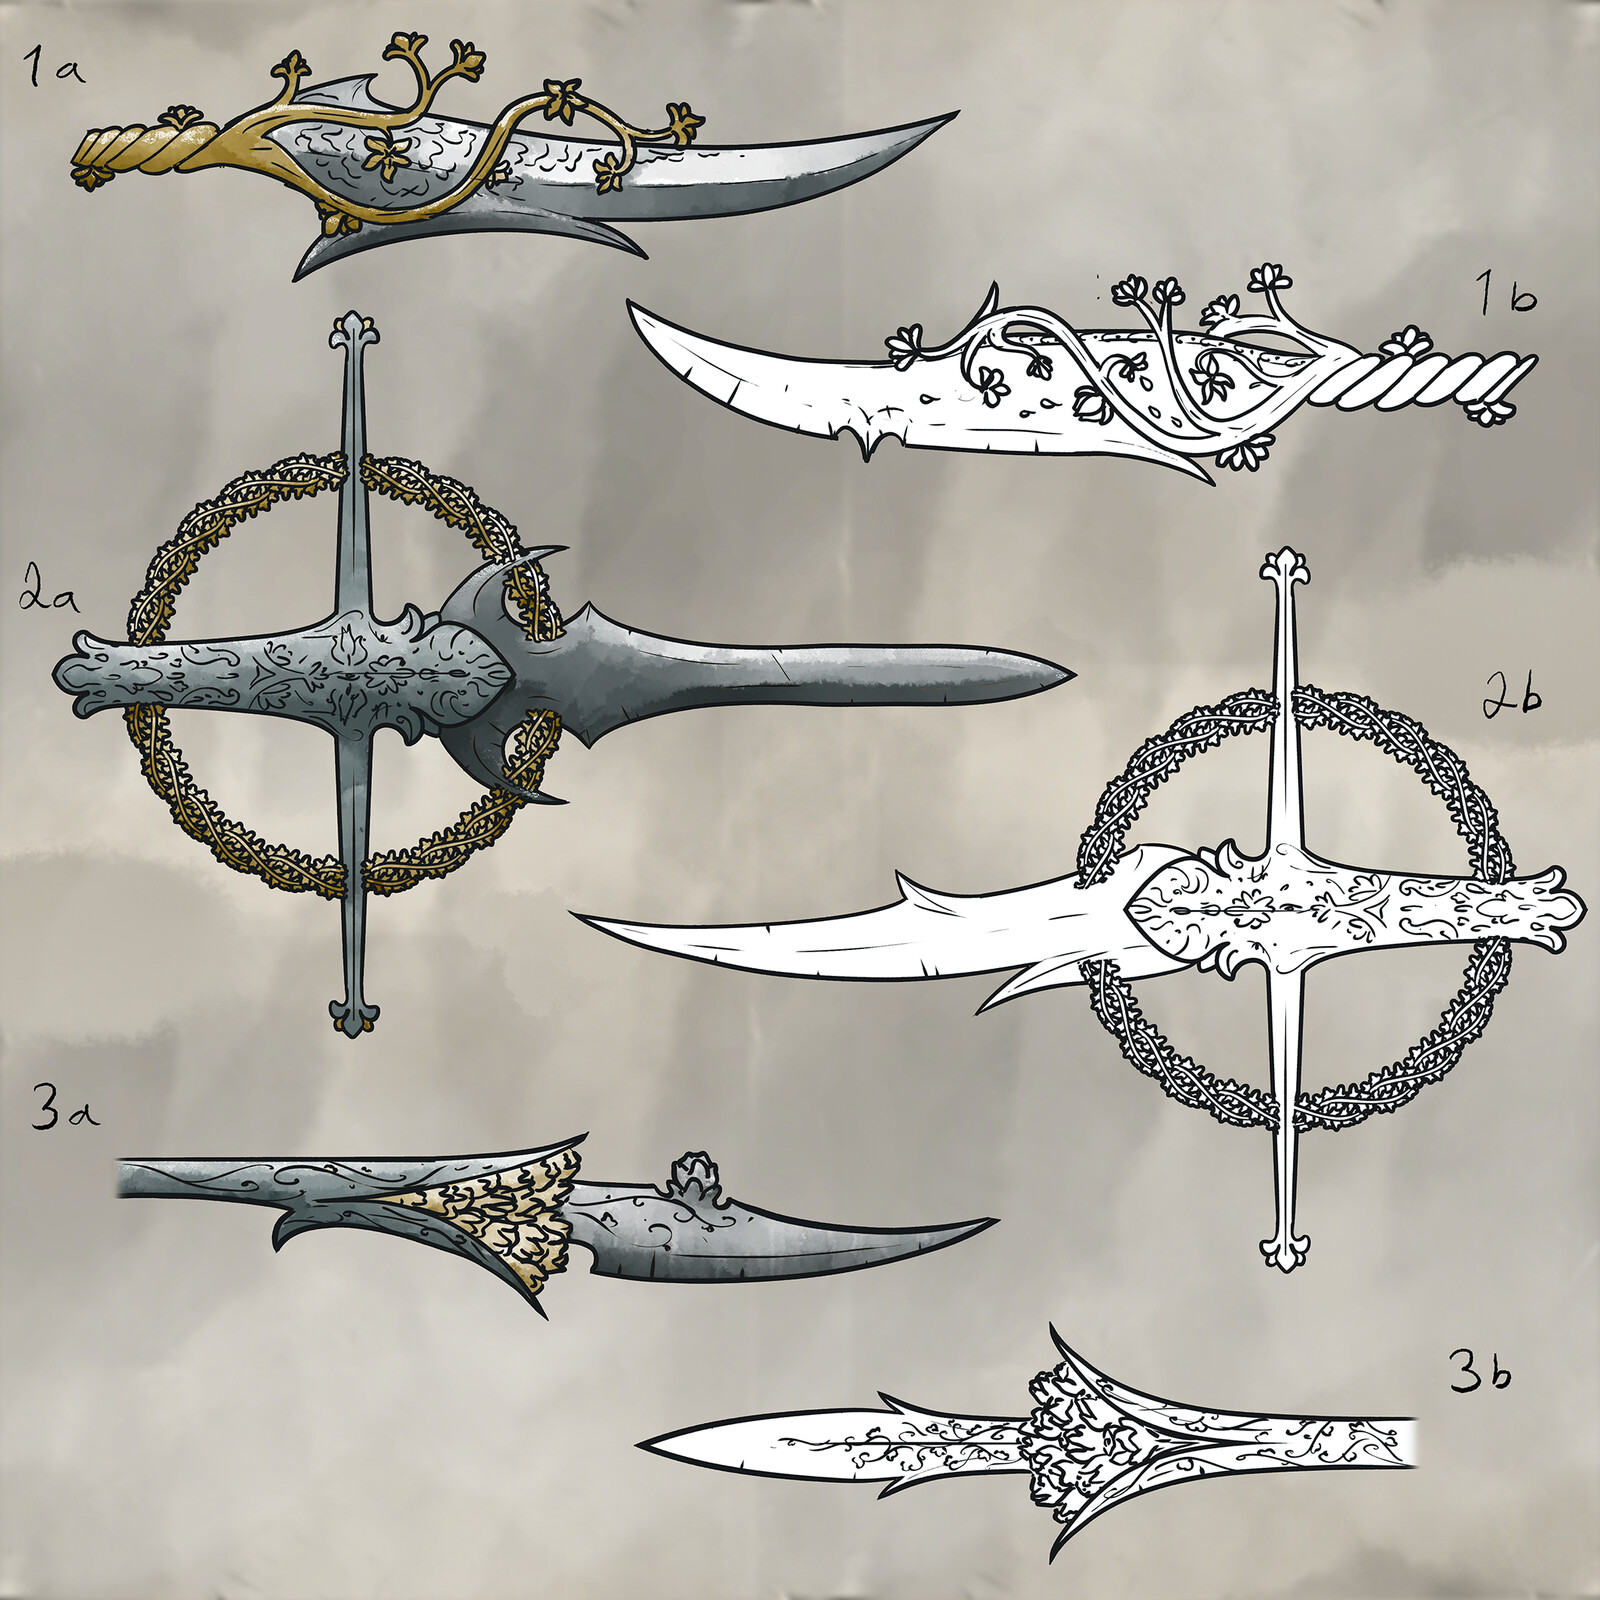 Blade Concept Refinements